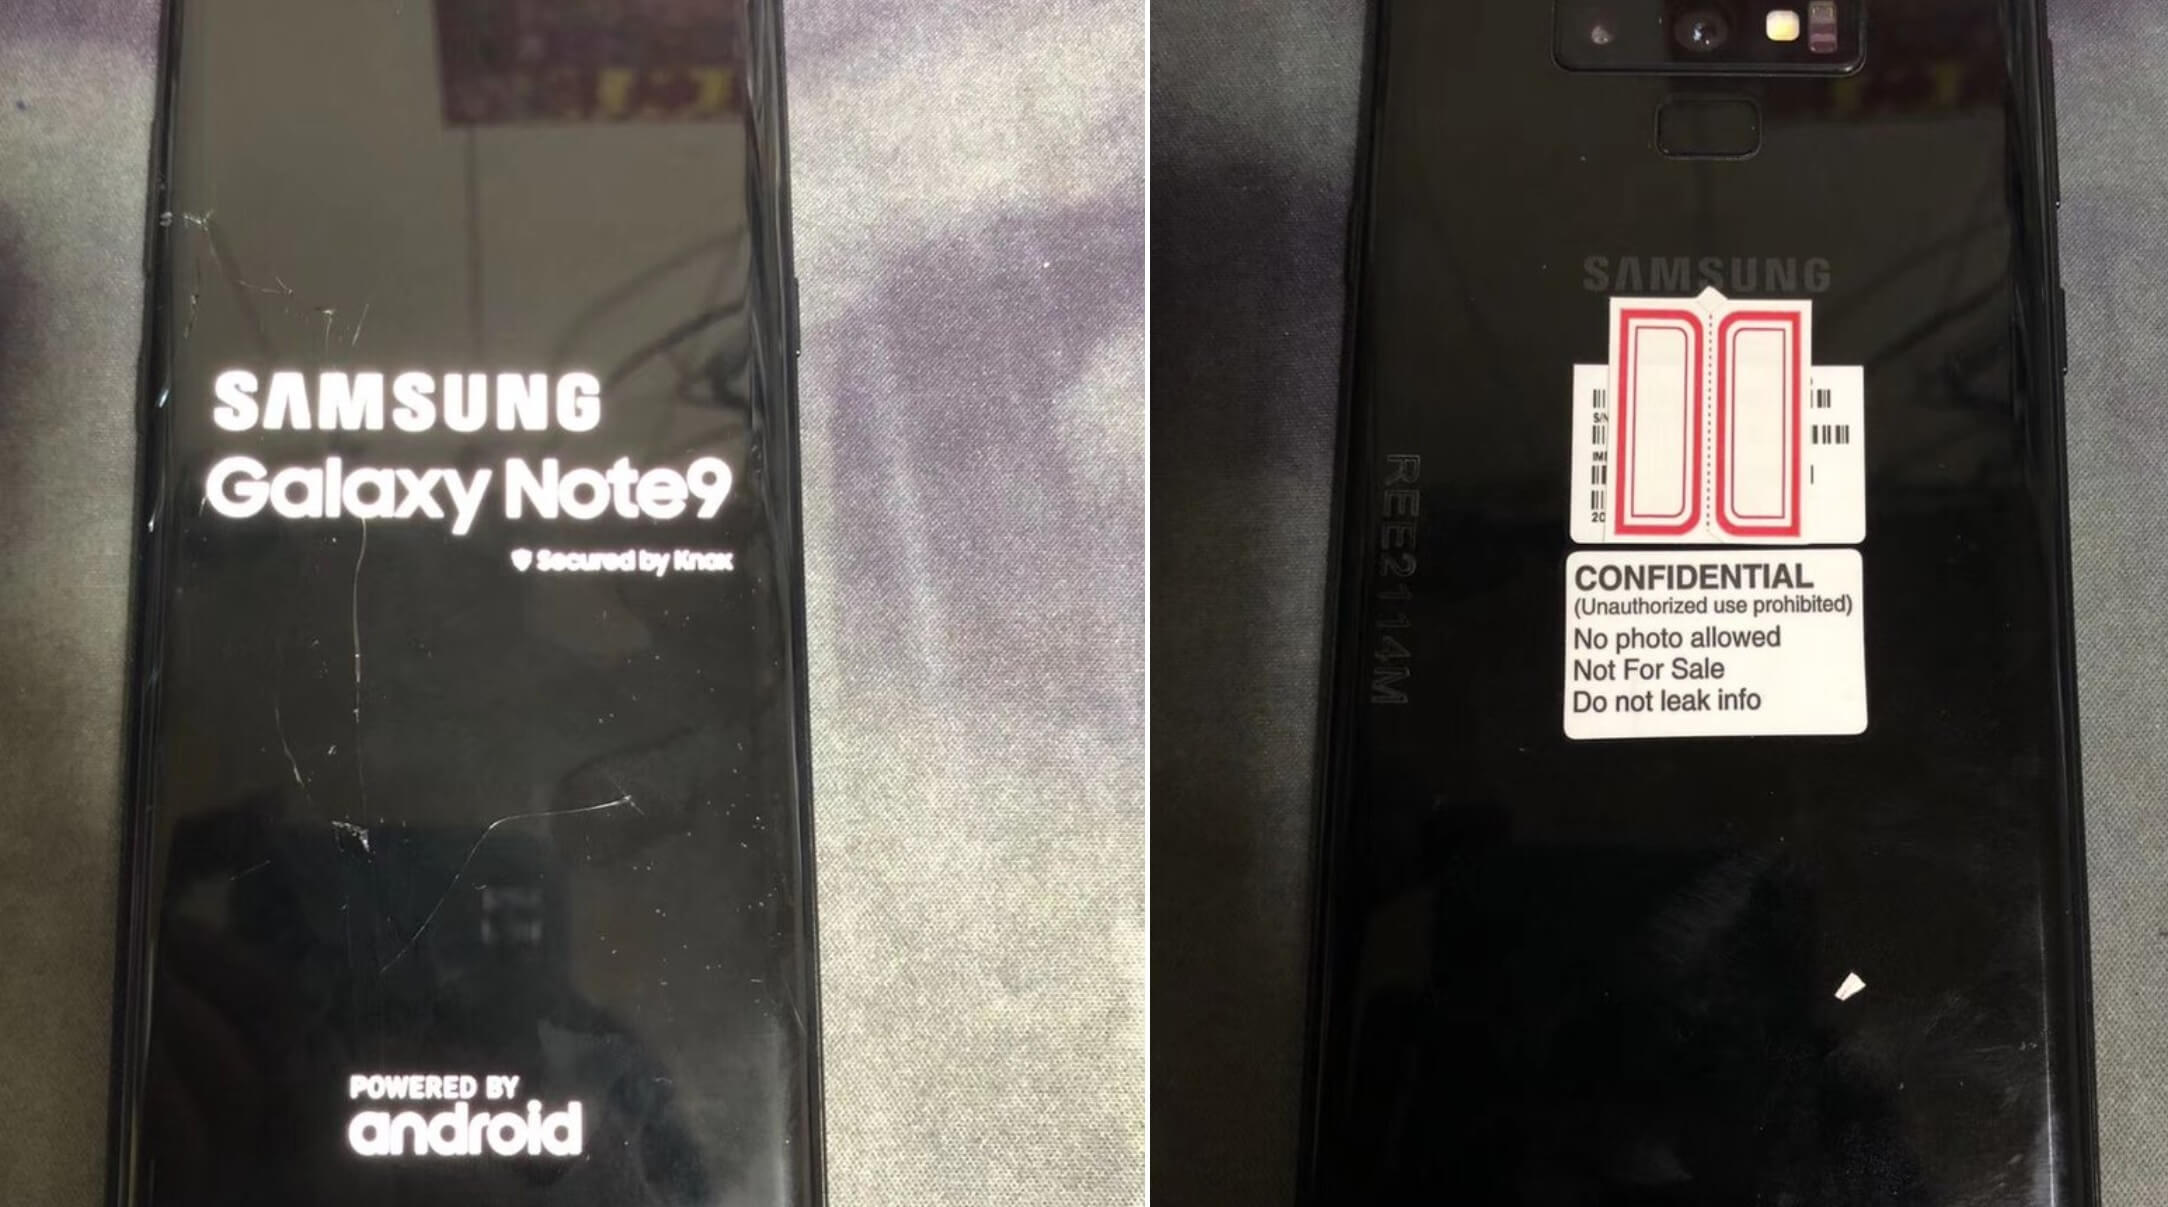 Galaxy Odyssey: rumors point to a Samsung gamer smartphone